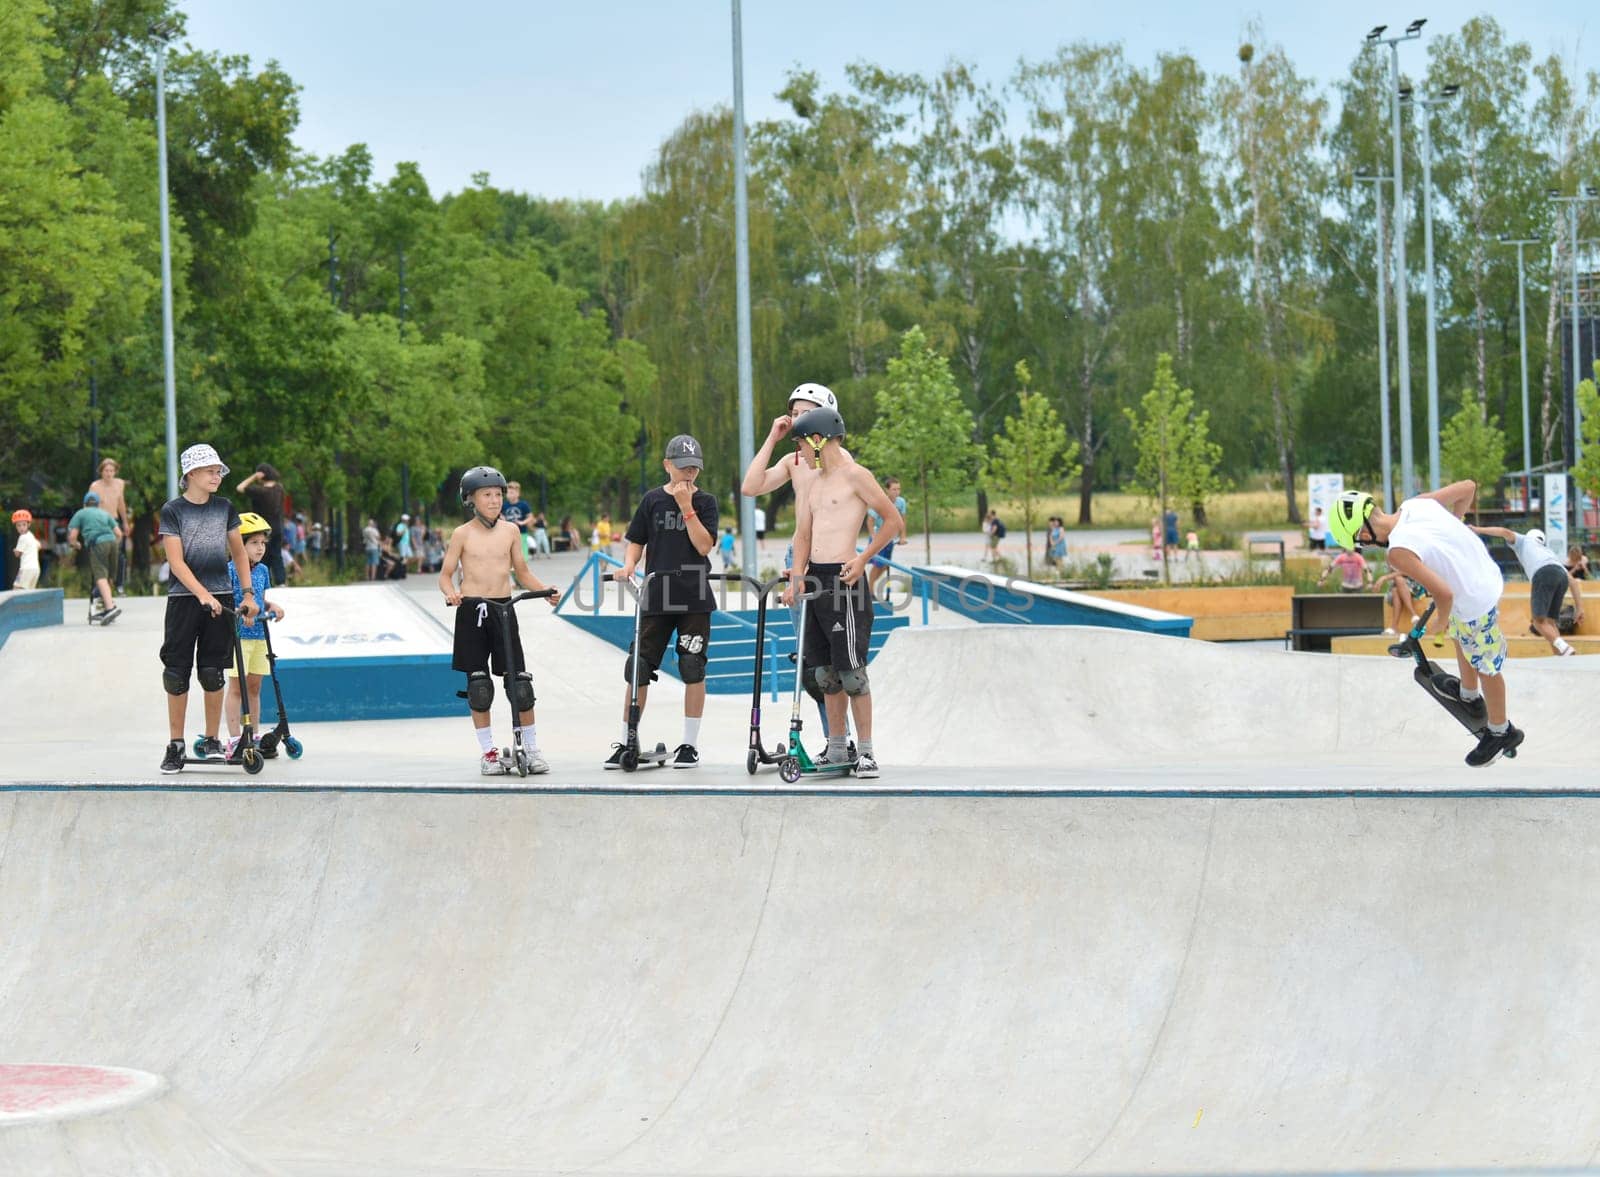 06.03.2022. Ukraine, Kyiv, VDNG park. children and teenagers ride skateboards by Suietska